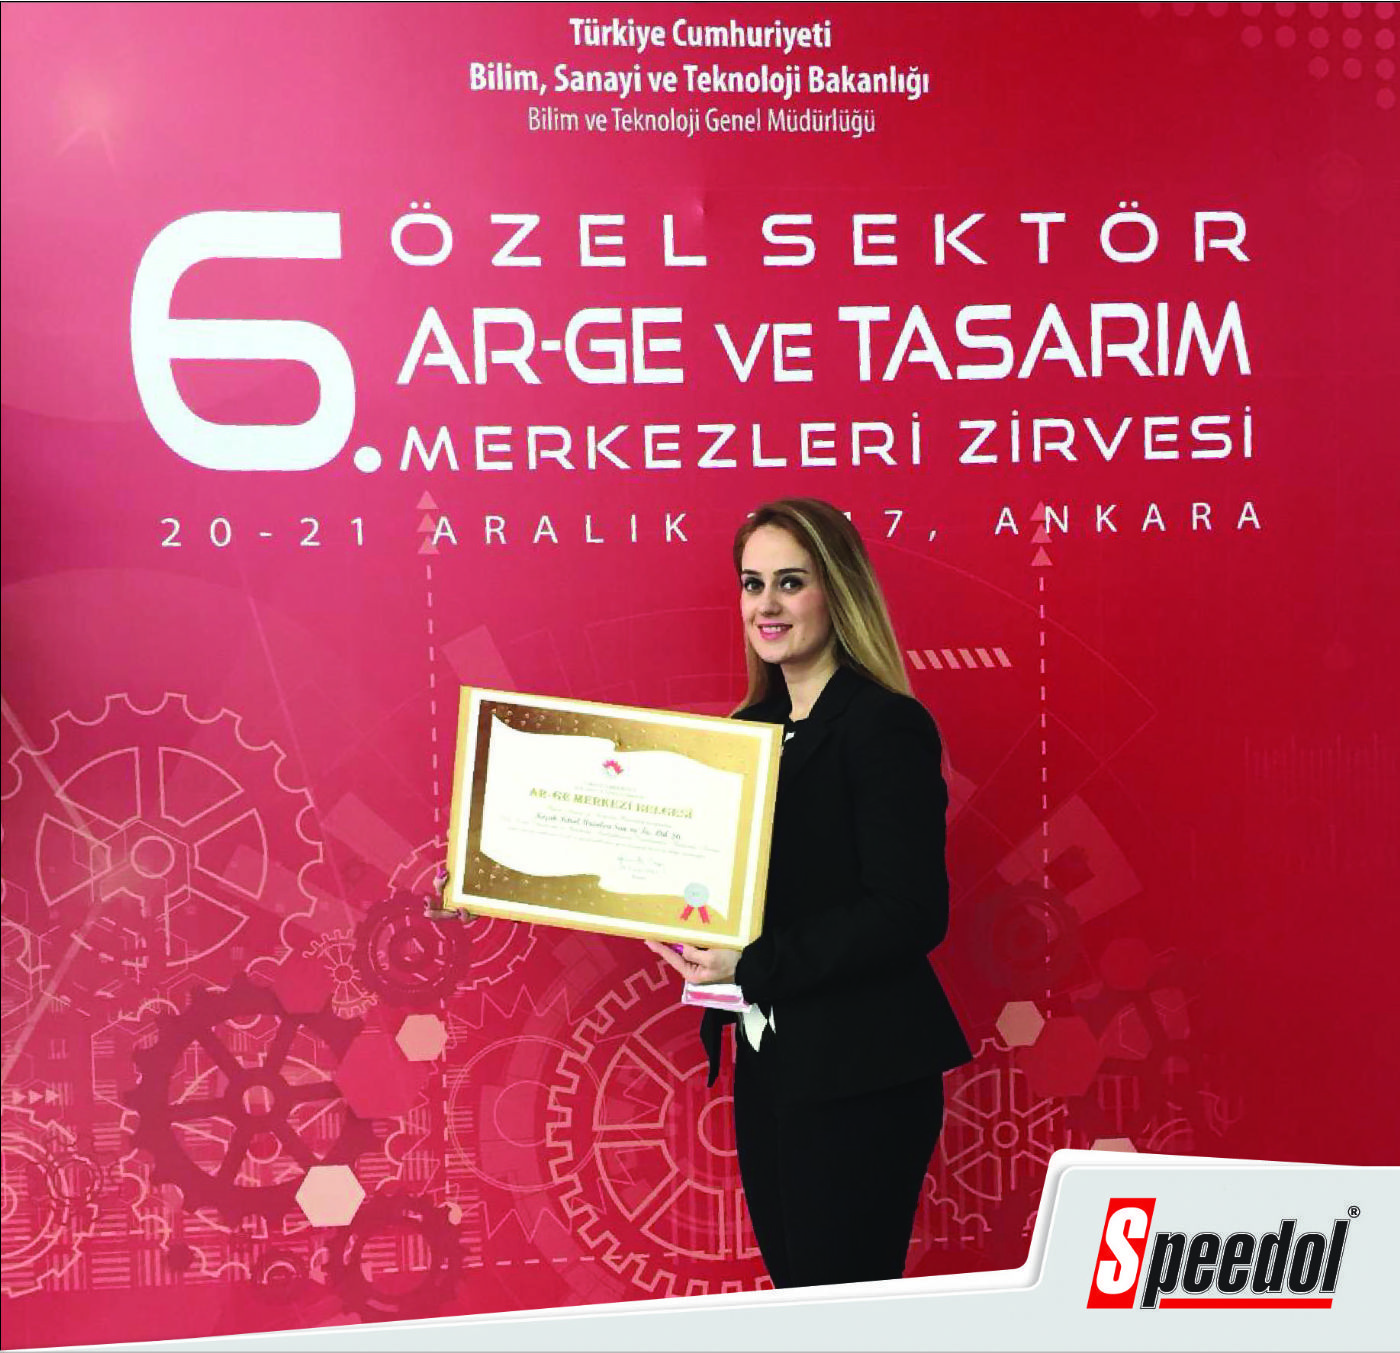 Koçak Speedol is awarded R&D Center Certificate